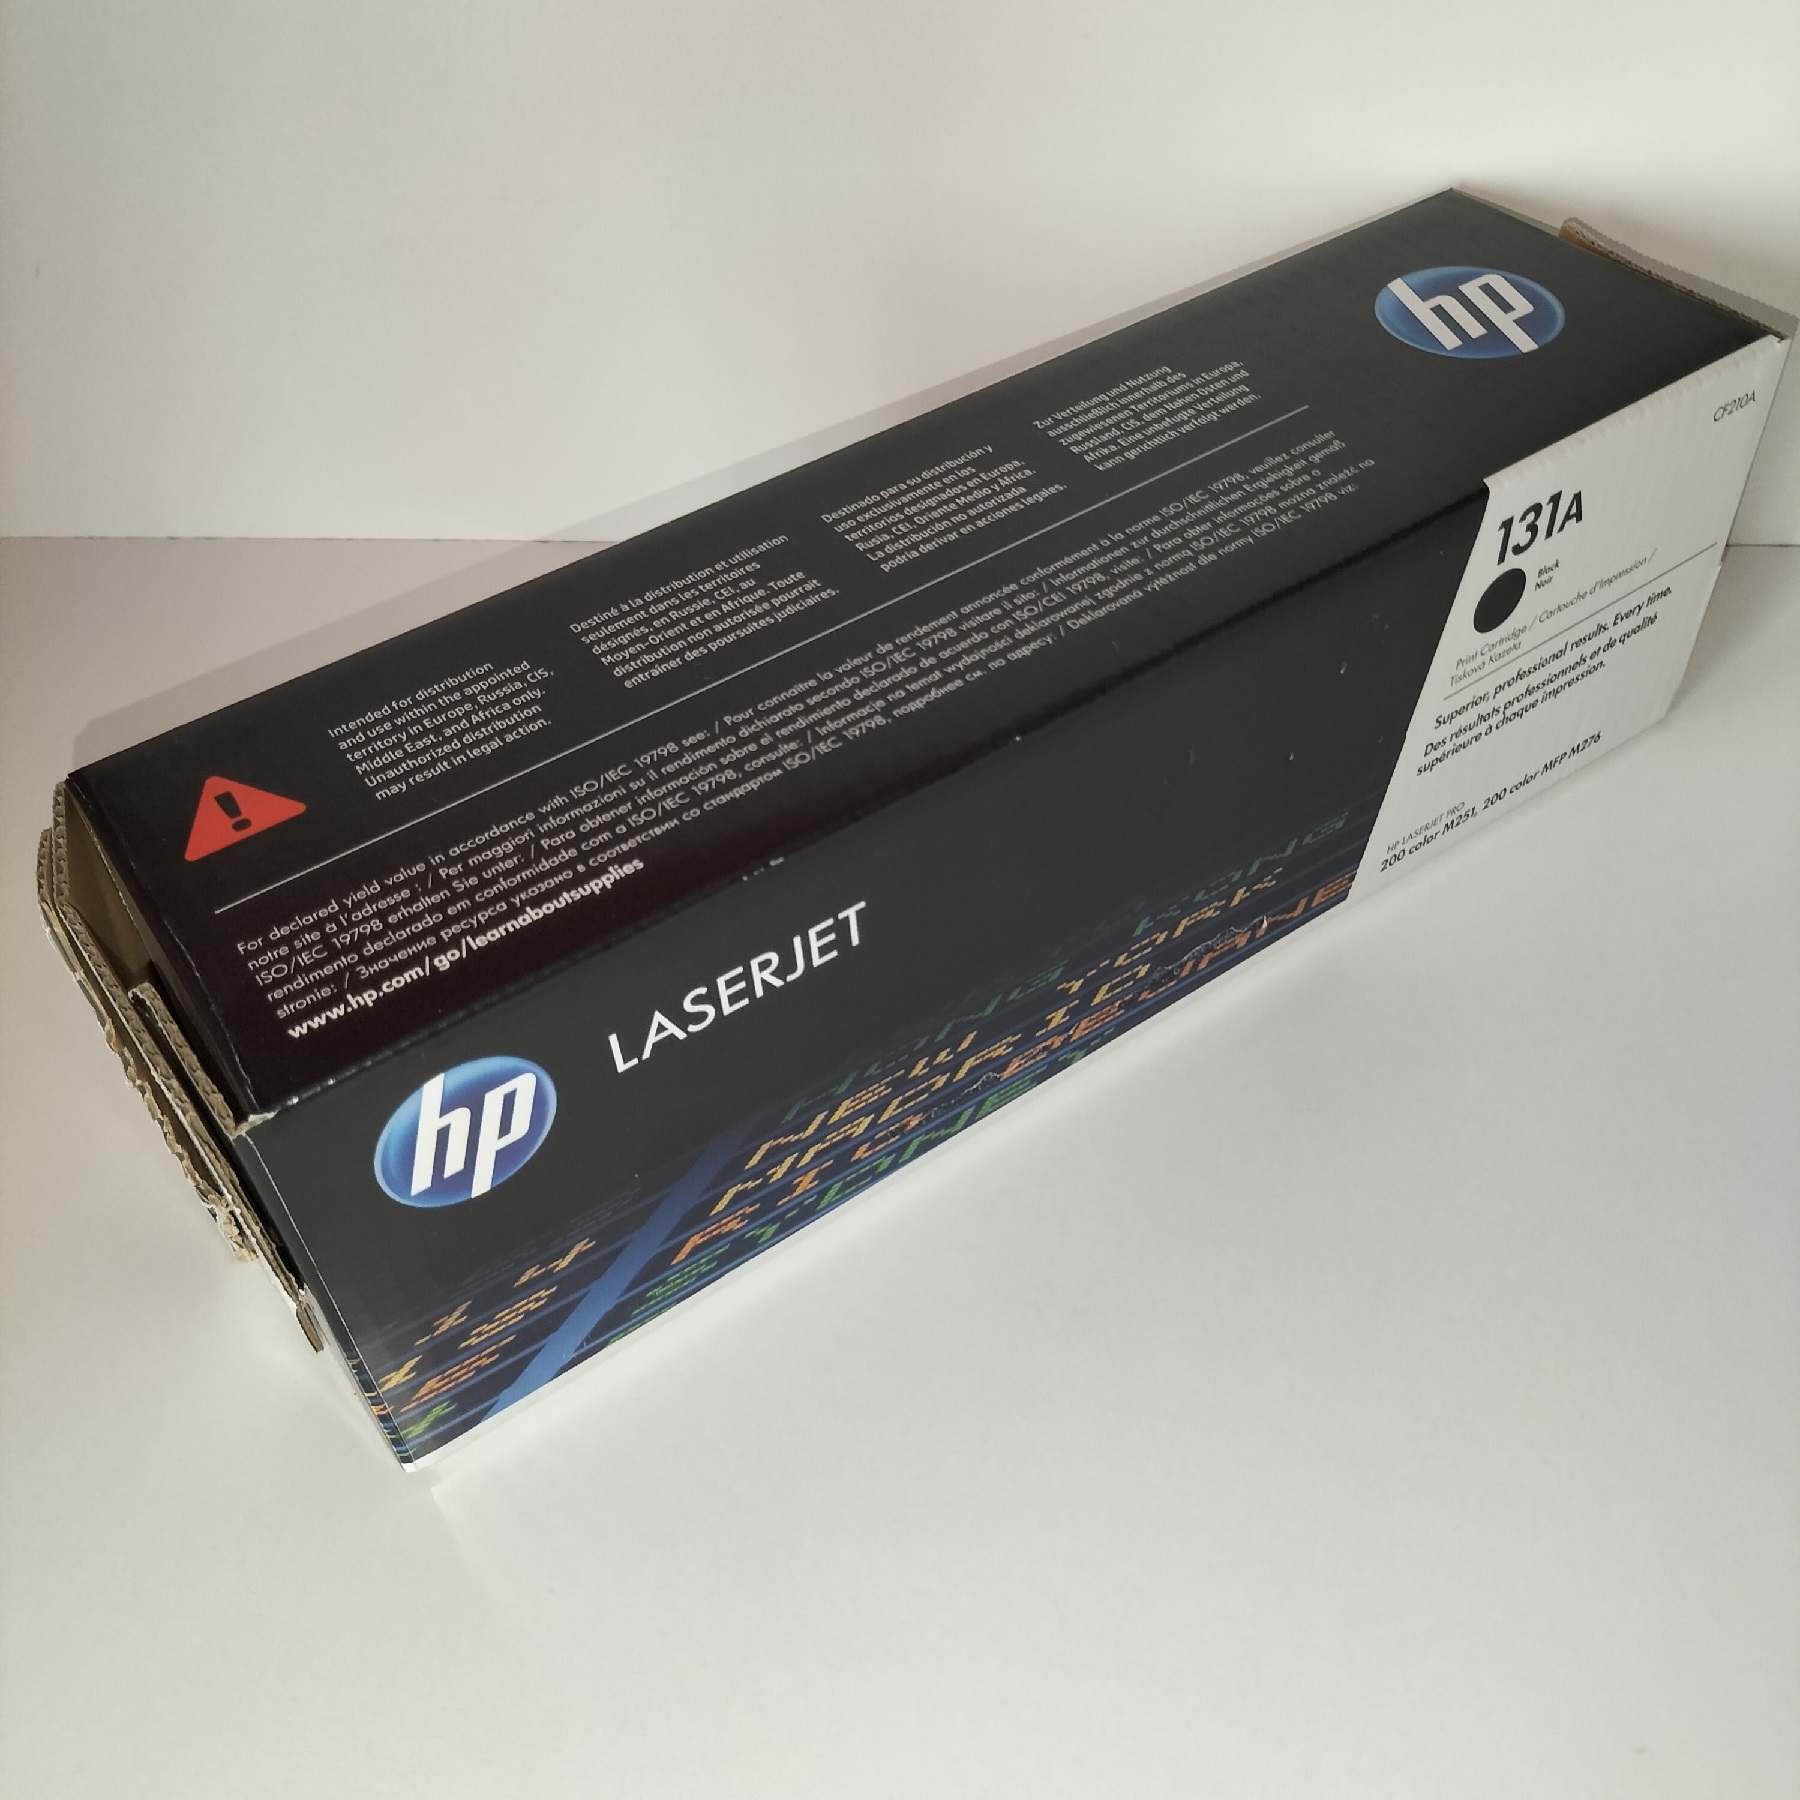 HP 131A CF210A grade C caja abierta bolsa sellada